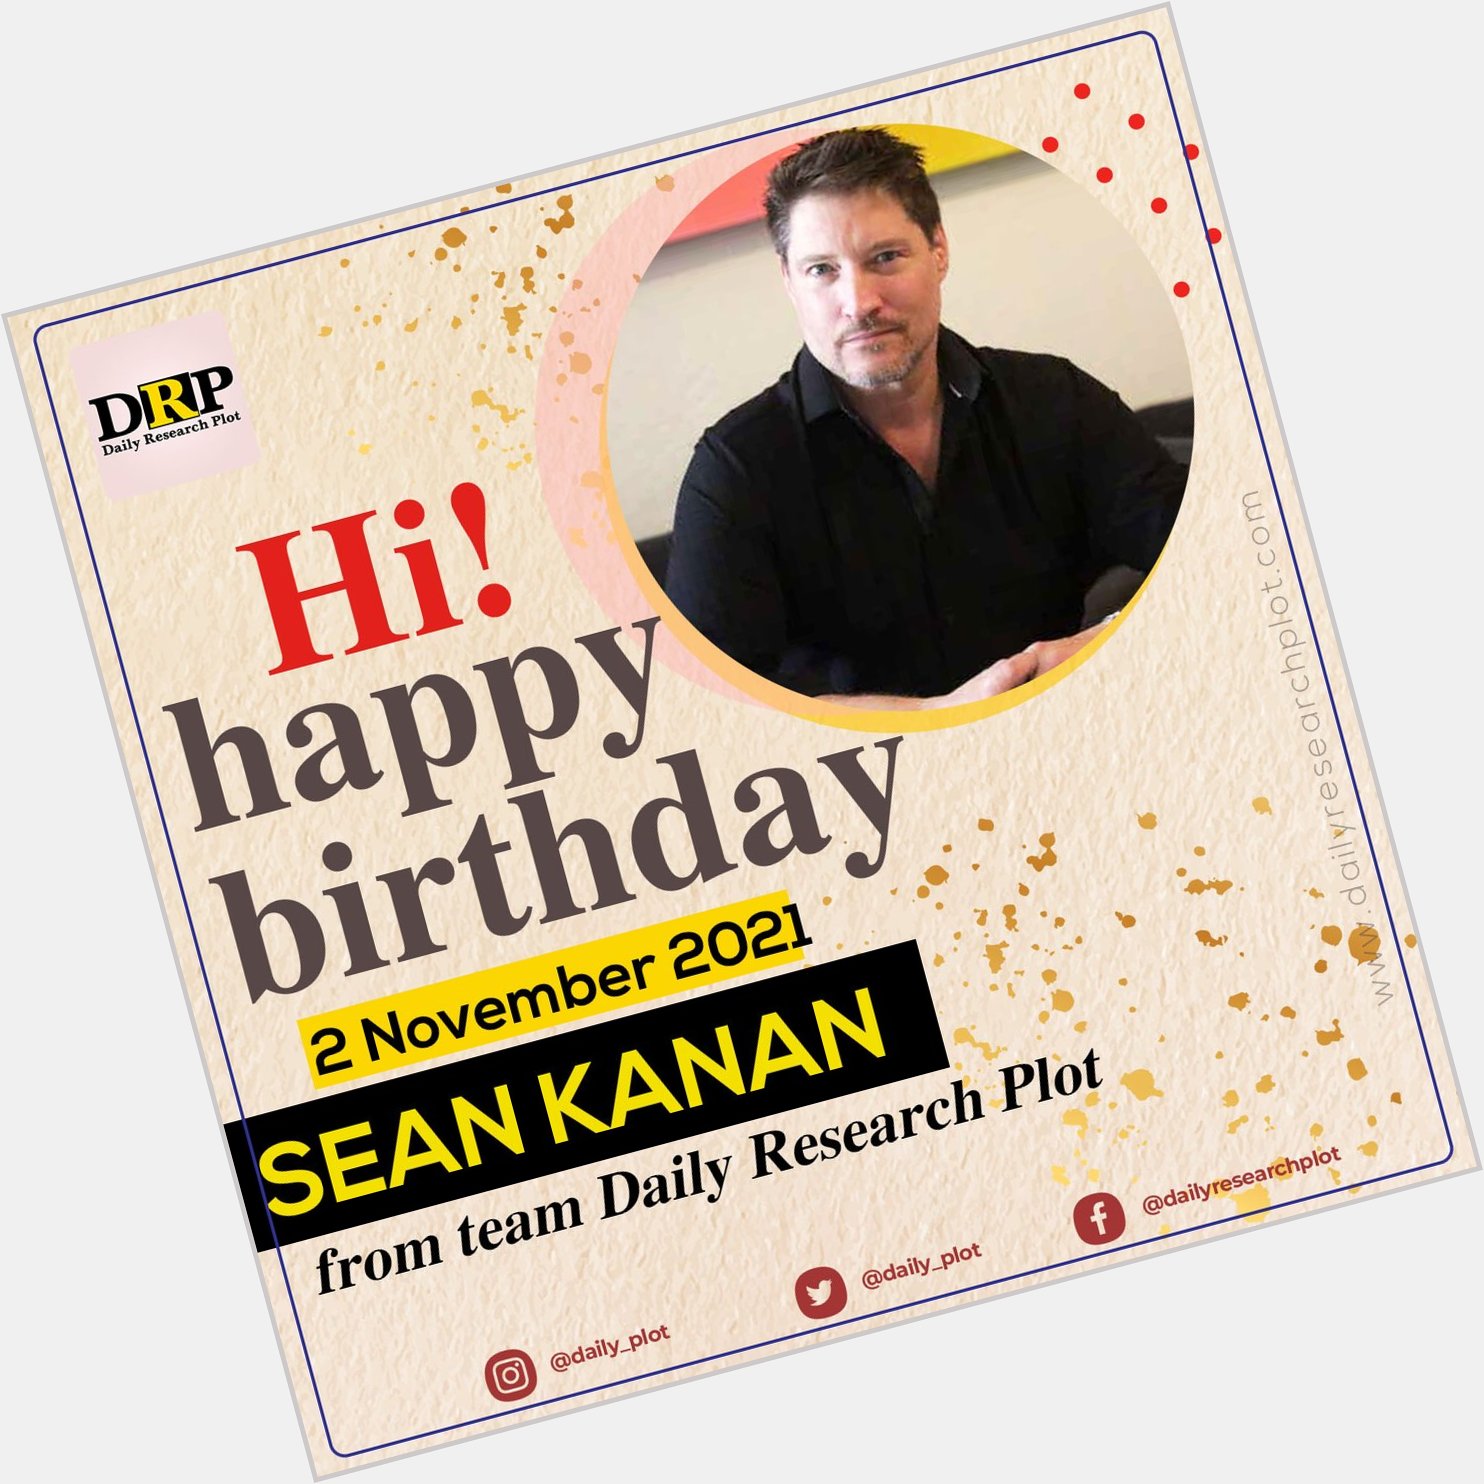 Happy Birthday!
Sean Kanan 